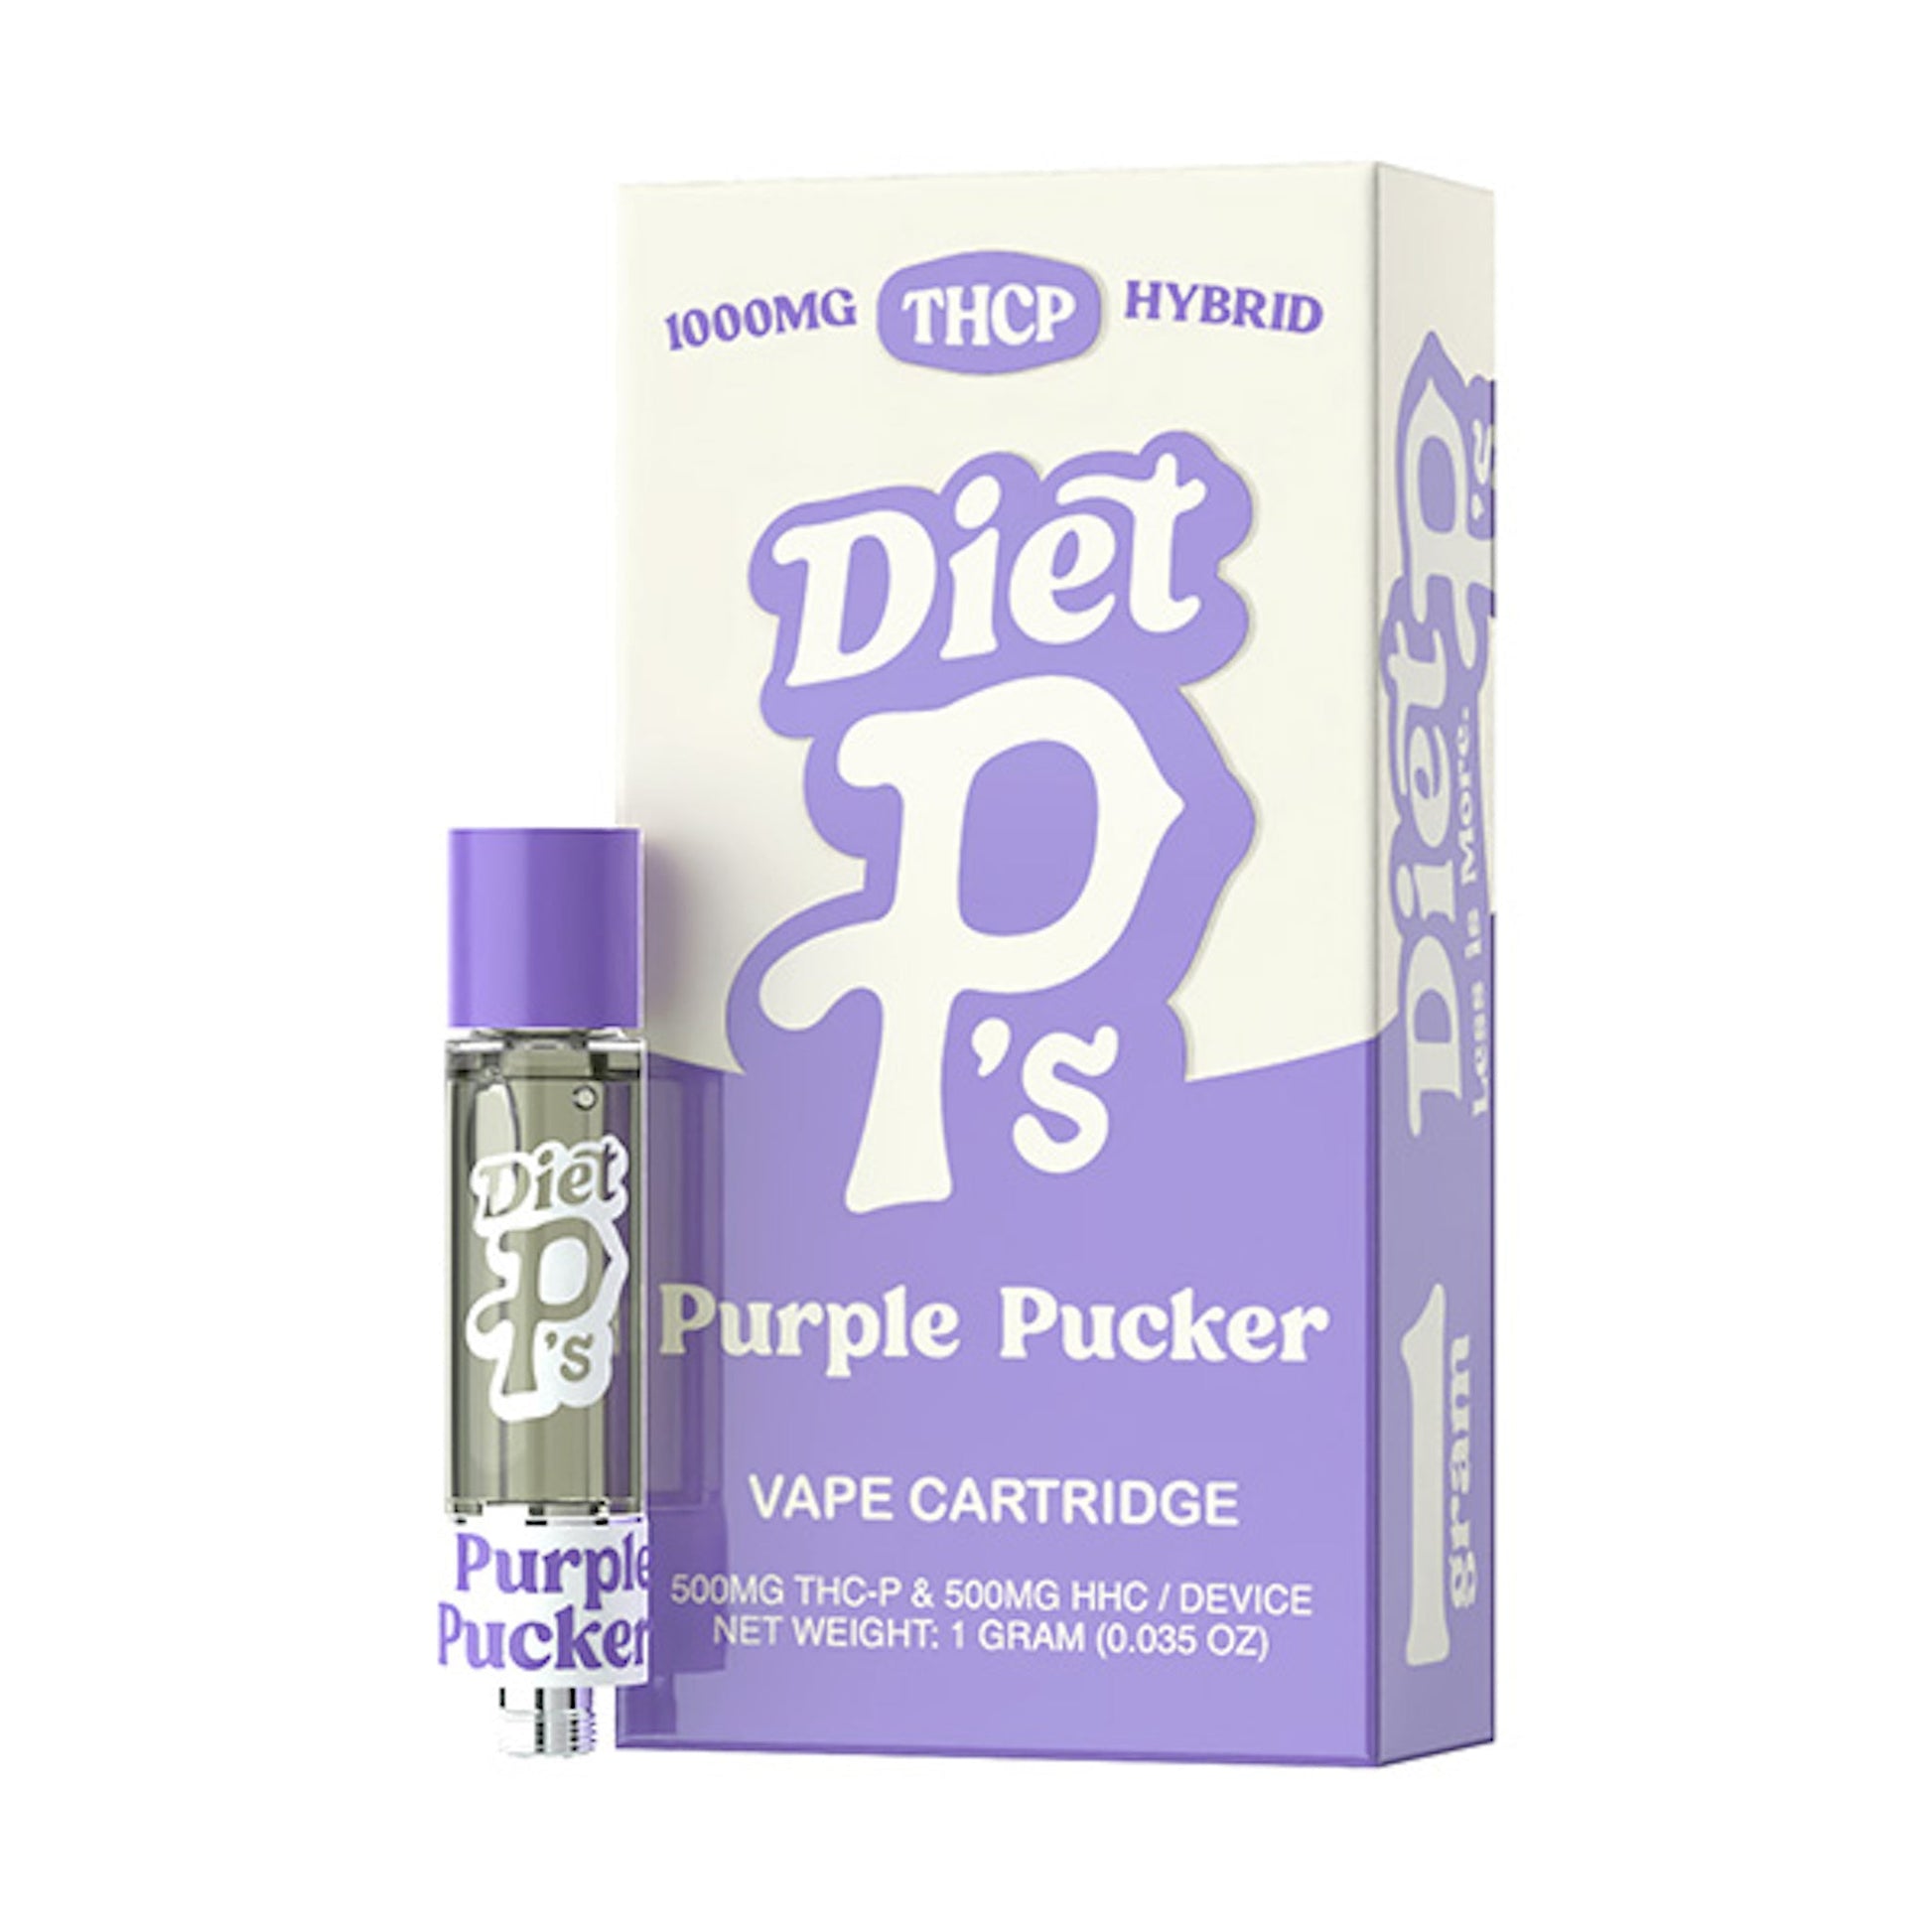 Diet Ps THC-P Cartridge - 1000mg